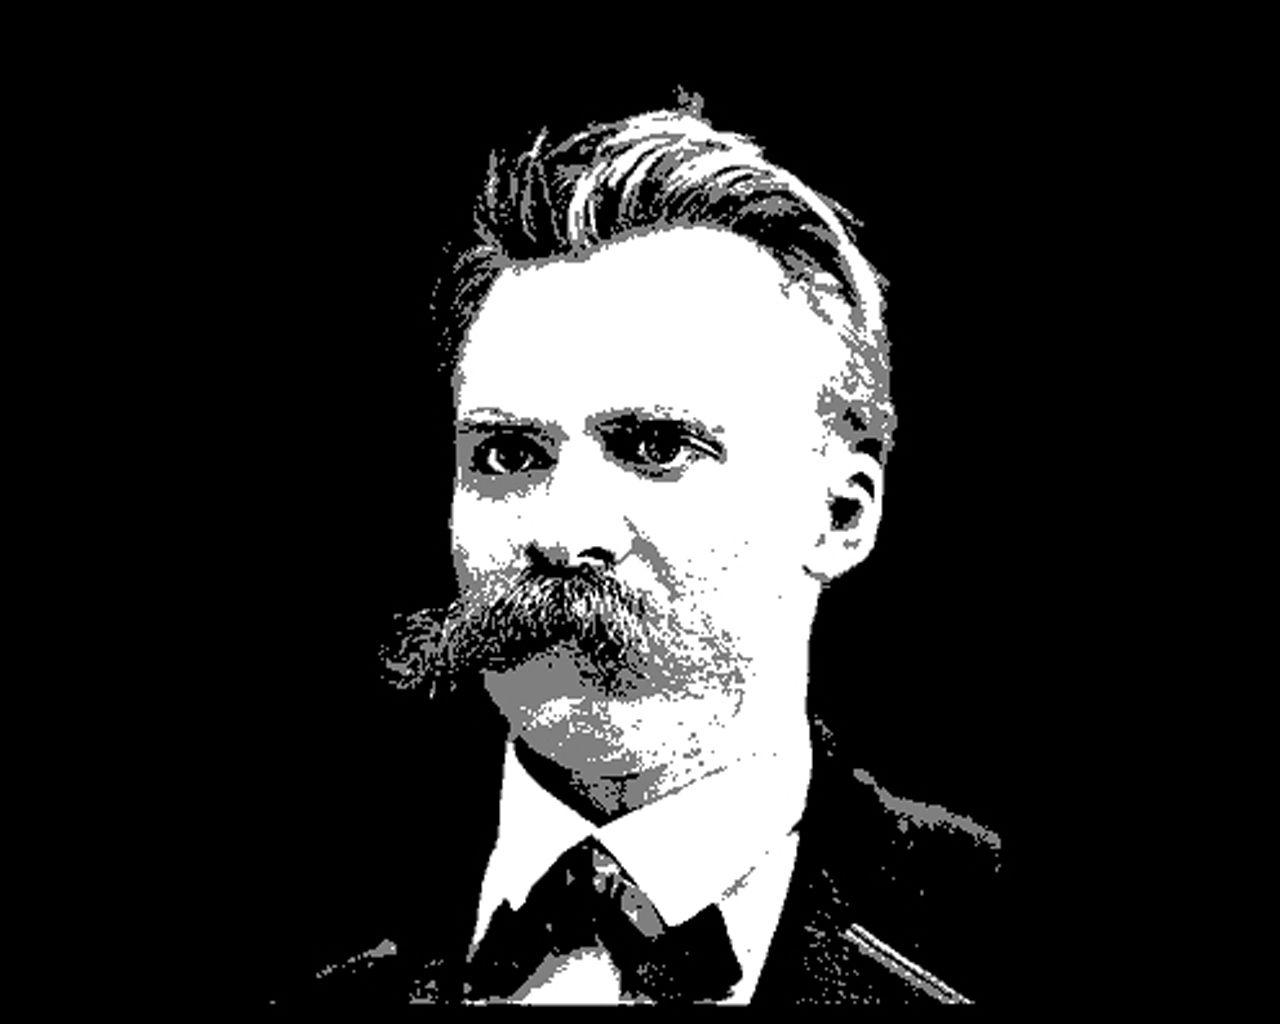 Nietzsche Wallpaper.com